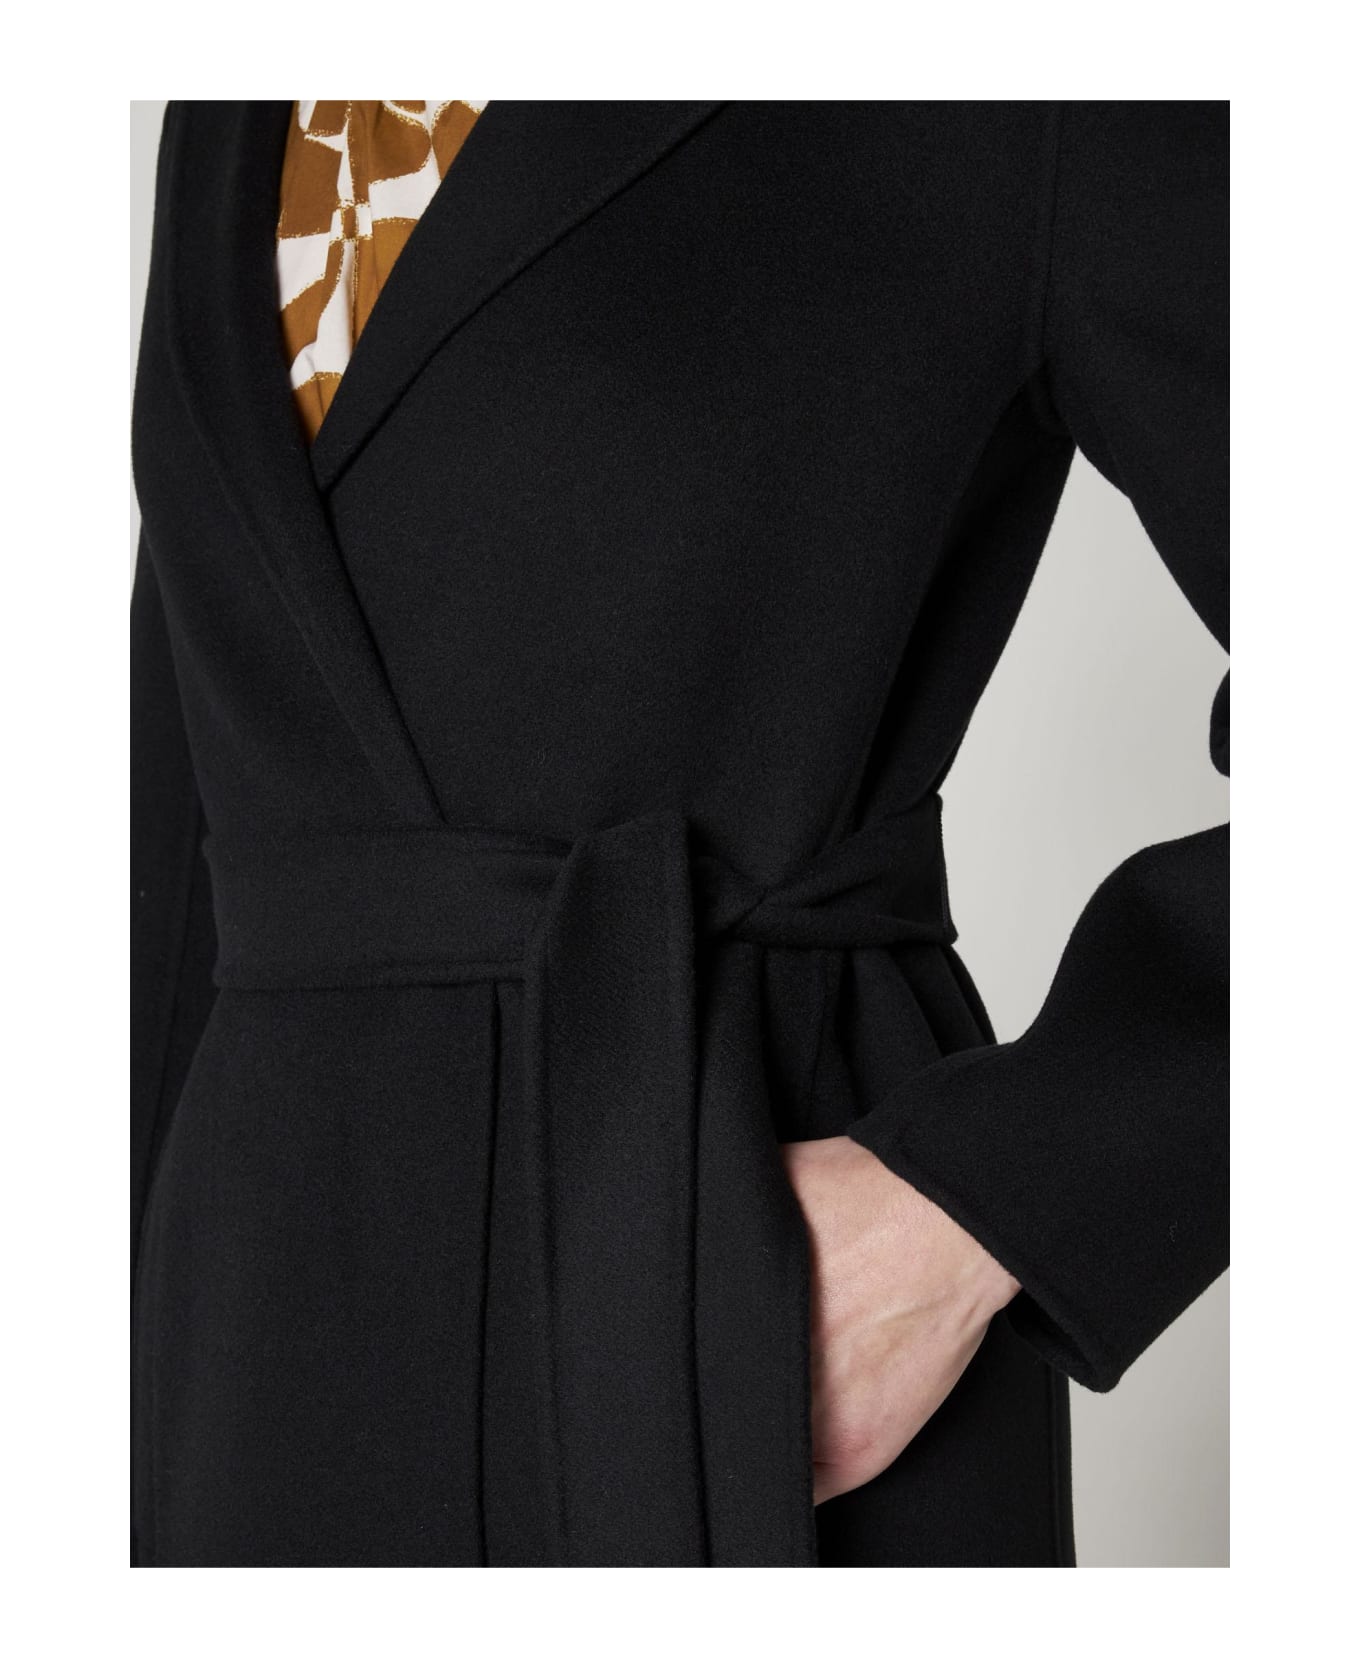 'S Max Mara Pauline Belted Wool Coat - Black コート